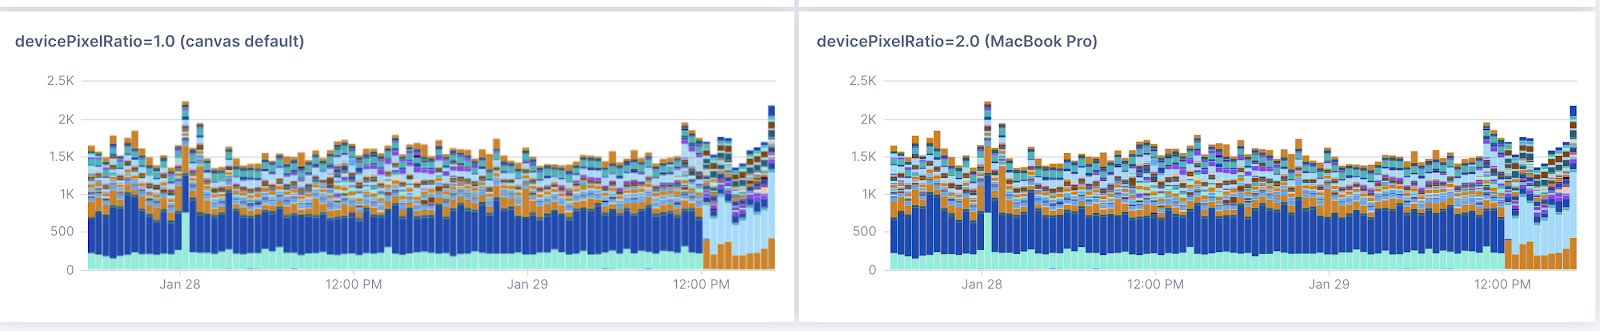 Lightstep Metrics Charting - devicePixelRatio 2